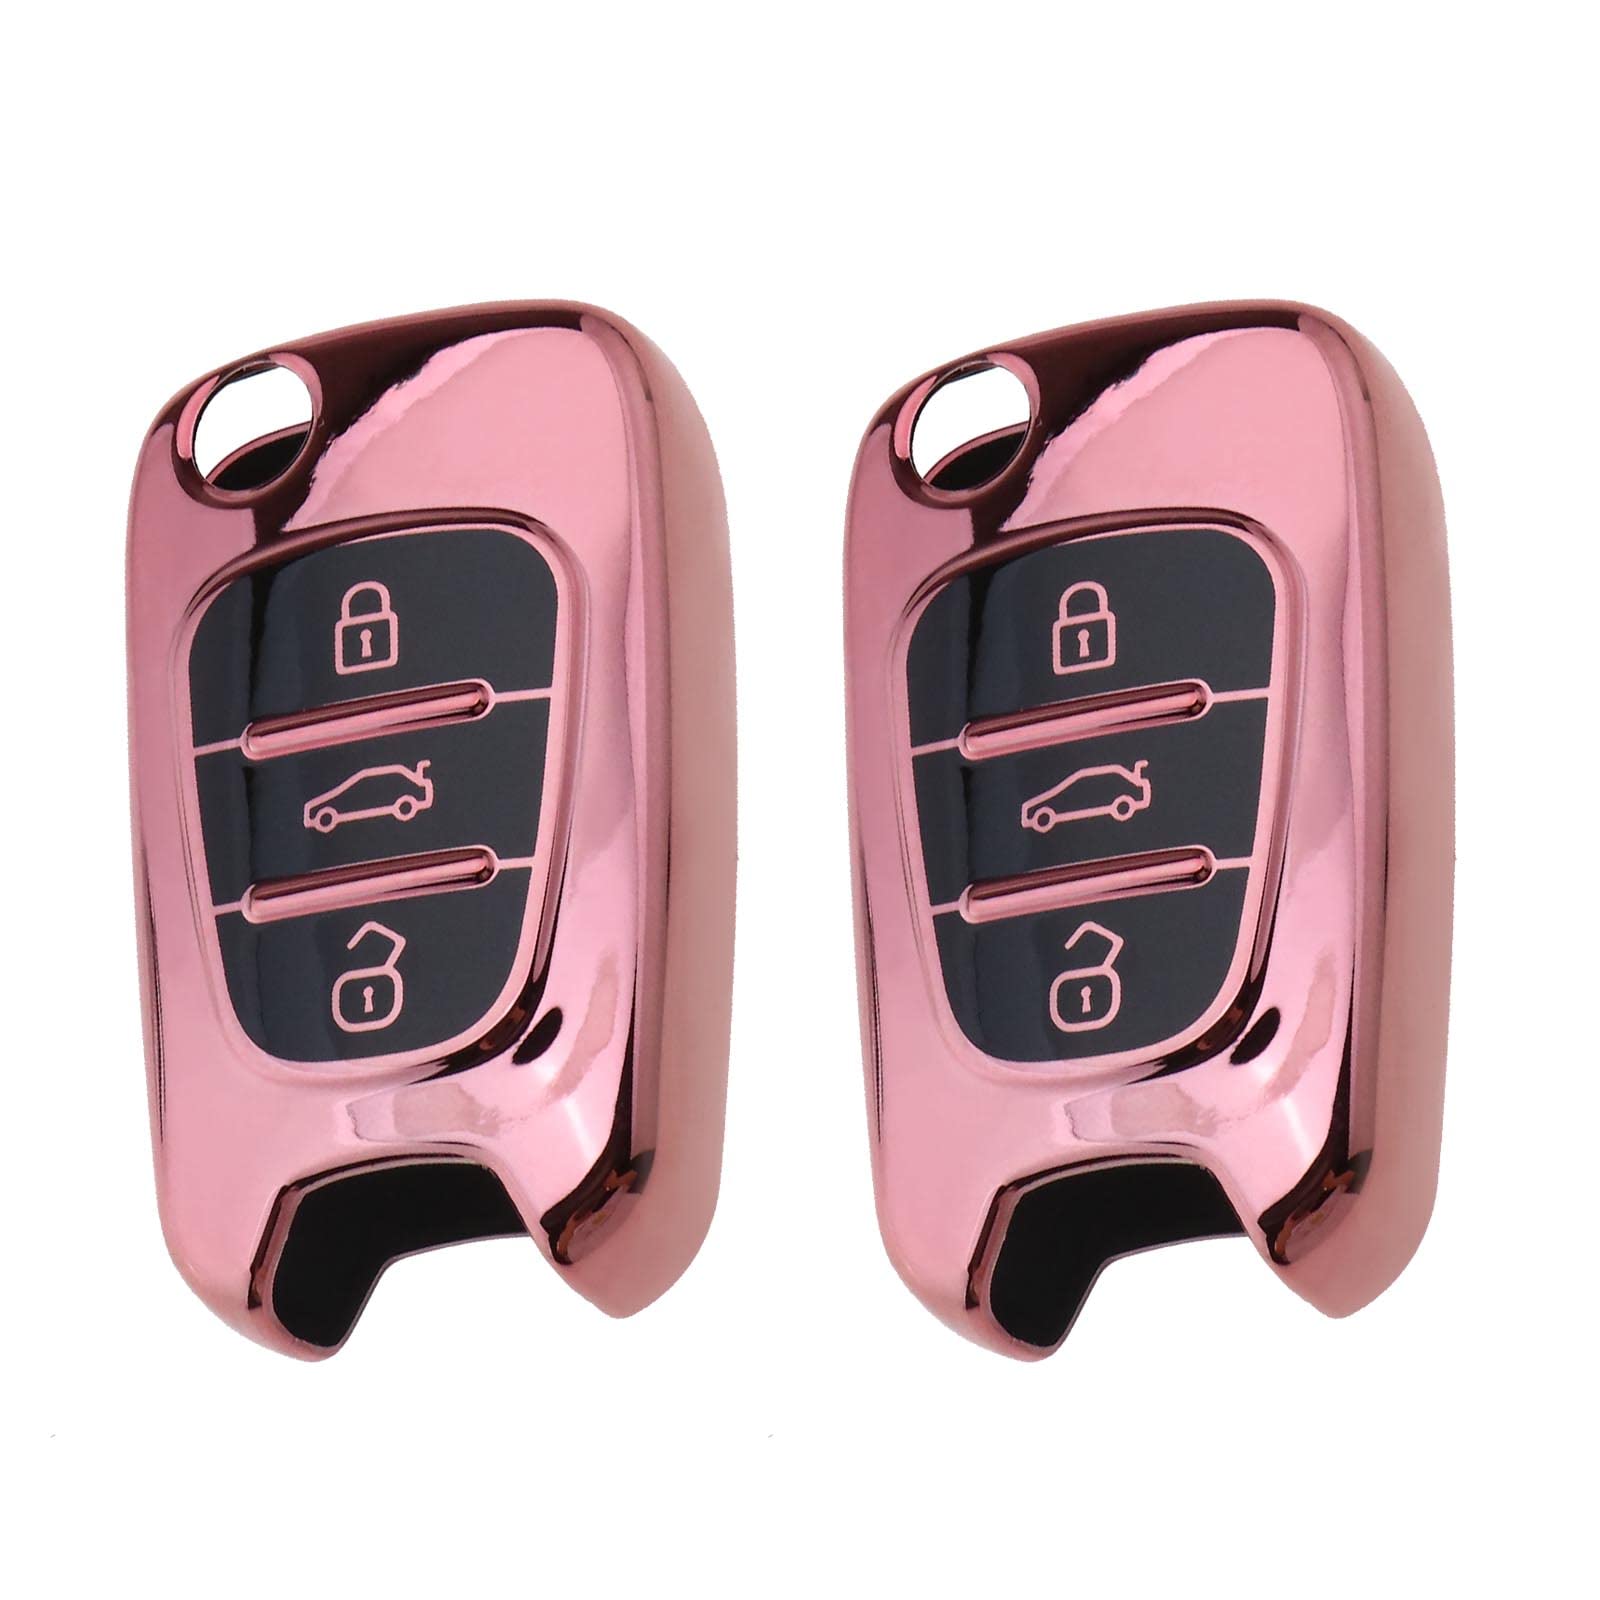 EMSea 2 Stück Autoschlüssel Abdeckung TPU 3 Tasten Schutzhülle Hülle Rose Pink Kompatibel mit Elantra / i20 / i30 / i40 / IX20 / IX35 / IX55 / Santa Fe/Veloster von EMSea